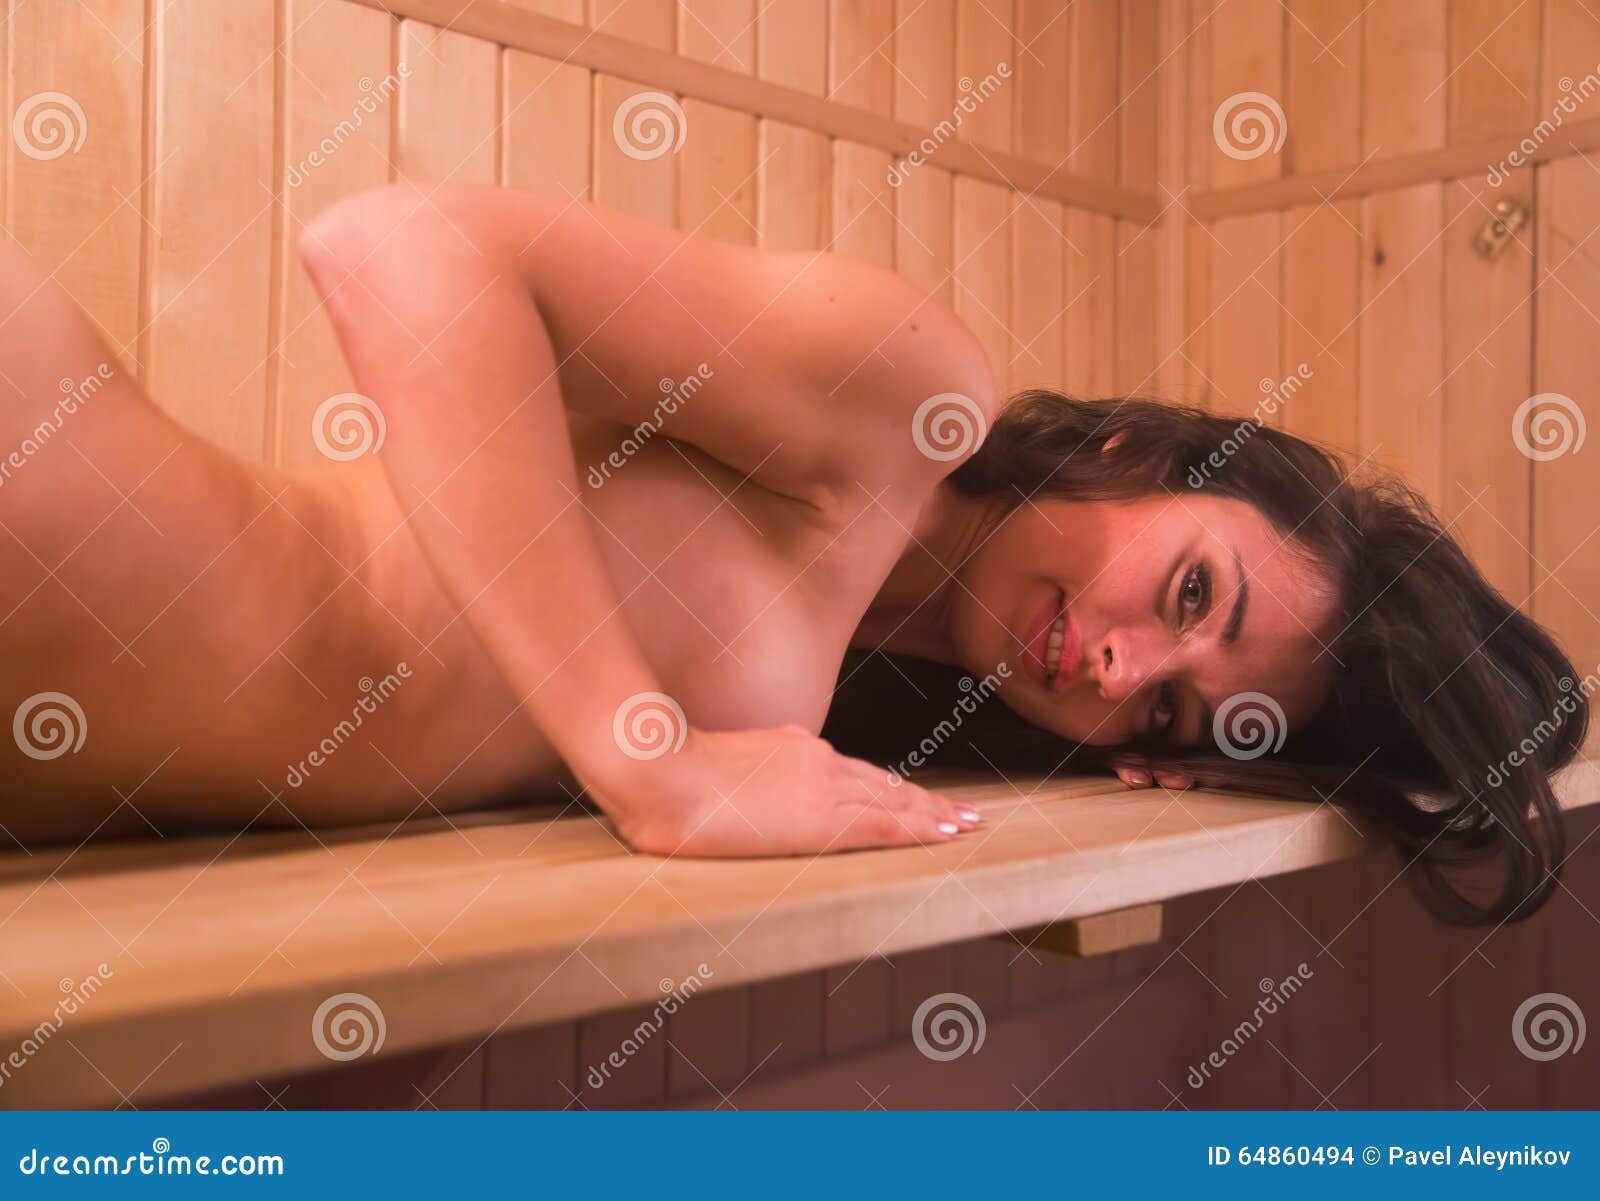 Nackt sauna frauen booking.mcc.com.mt: Frau